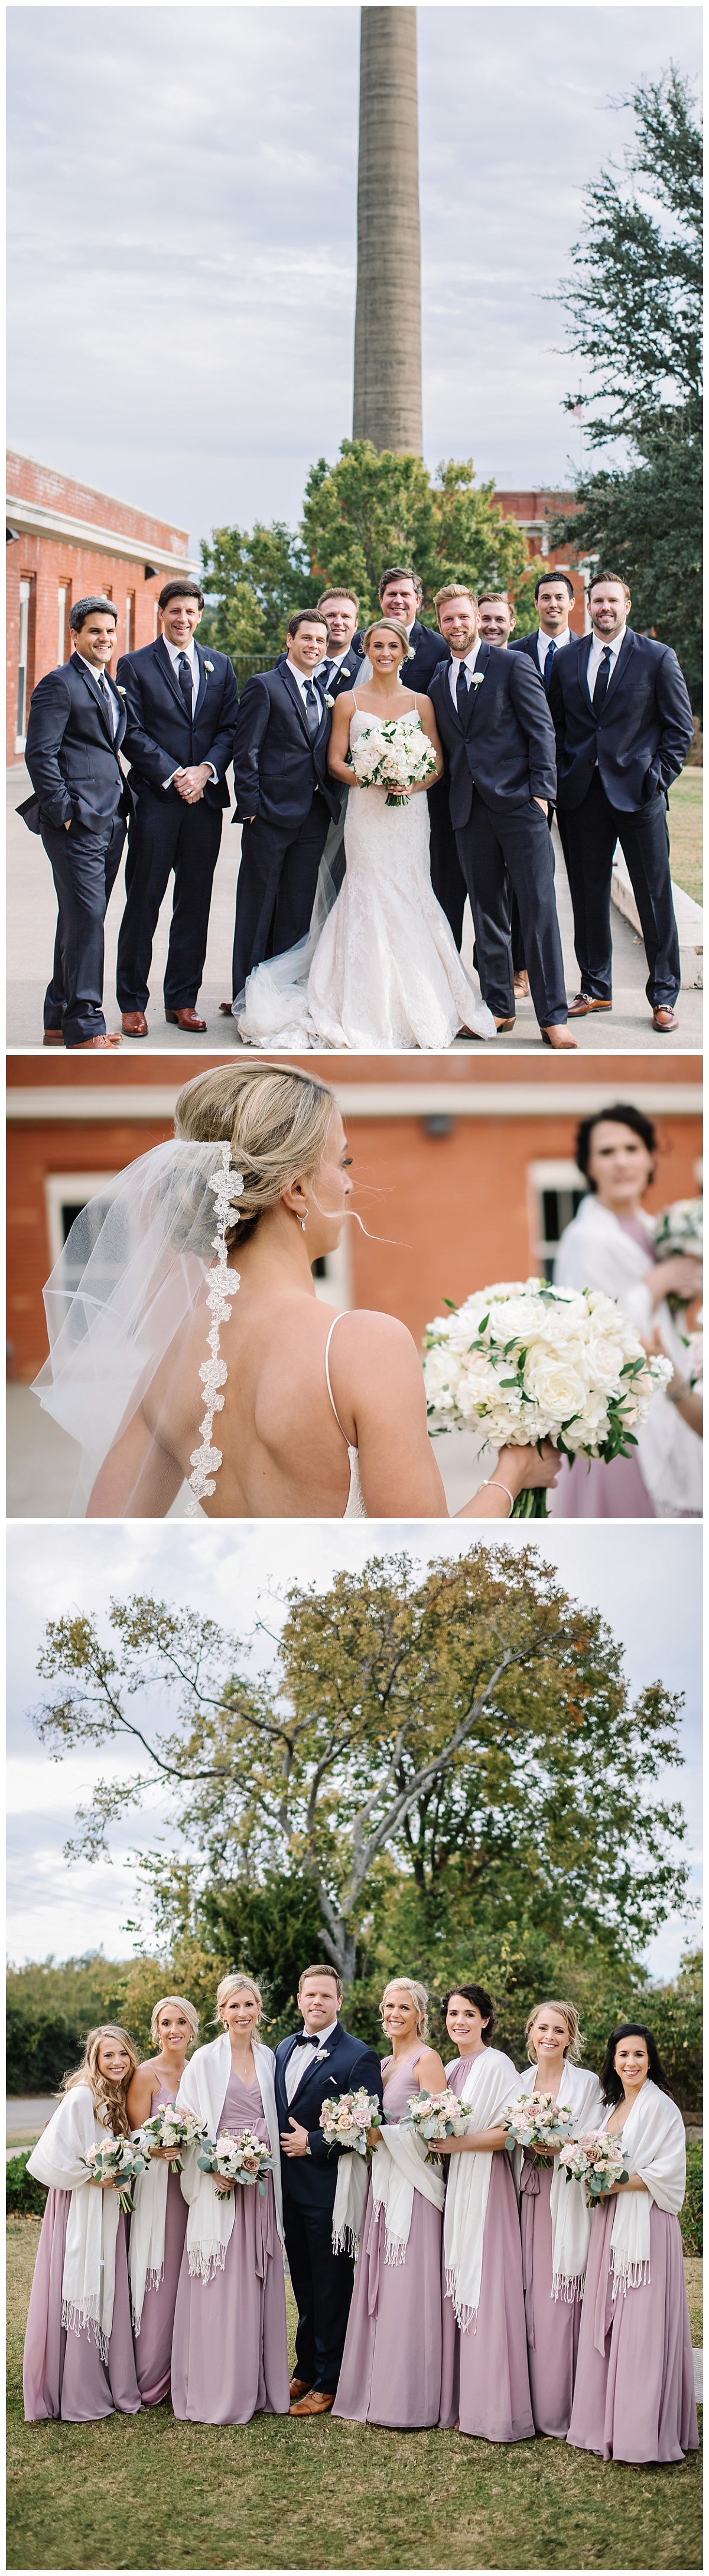 Dallas Filter Building,wedding flowers,outdoor ceremony,hydrangeas,bouquets,dallas wedding,fall wedding, indoor reception, traditional wedding flowers